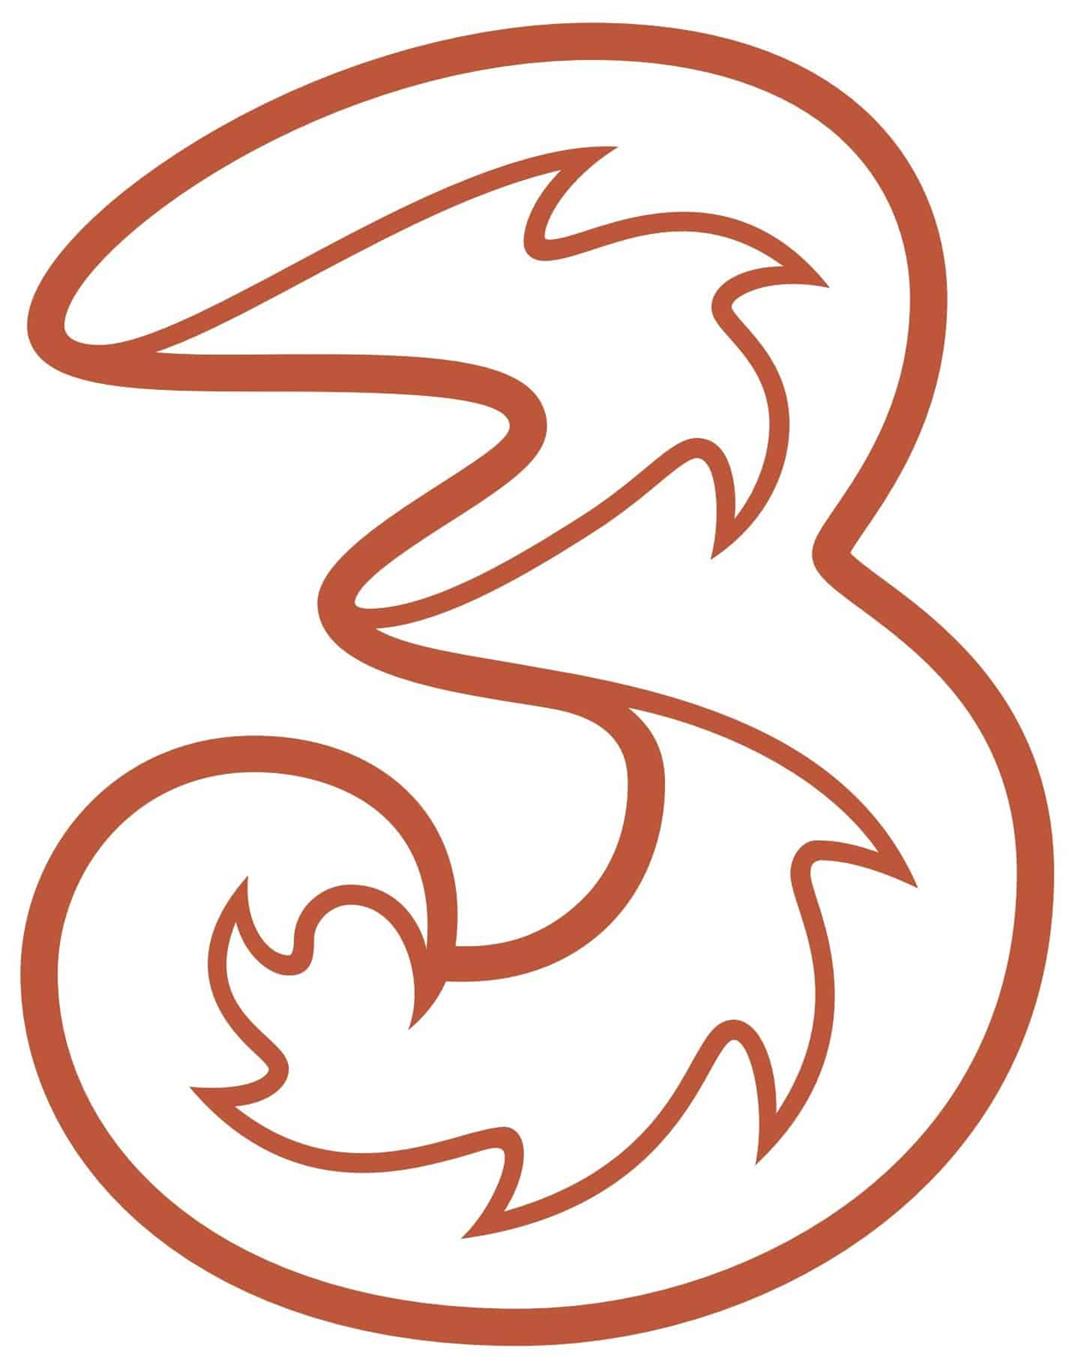 Hutchison 3G logo